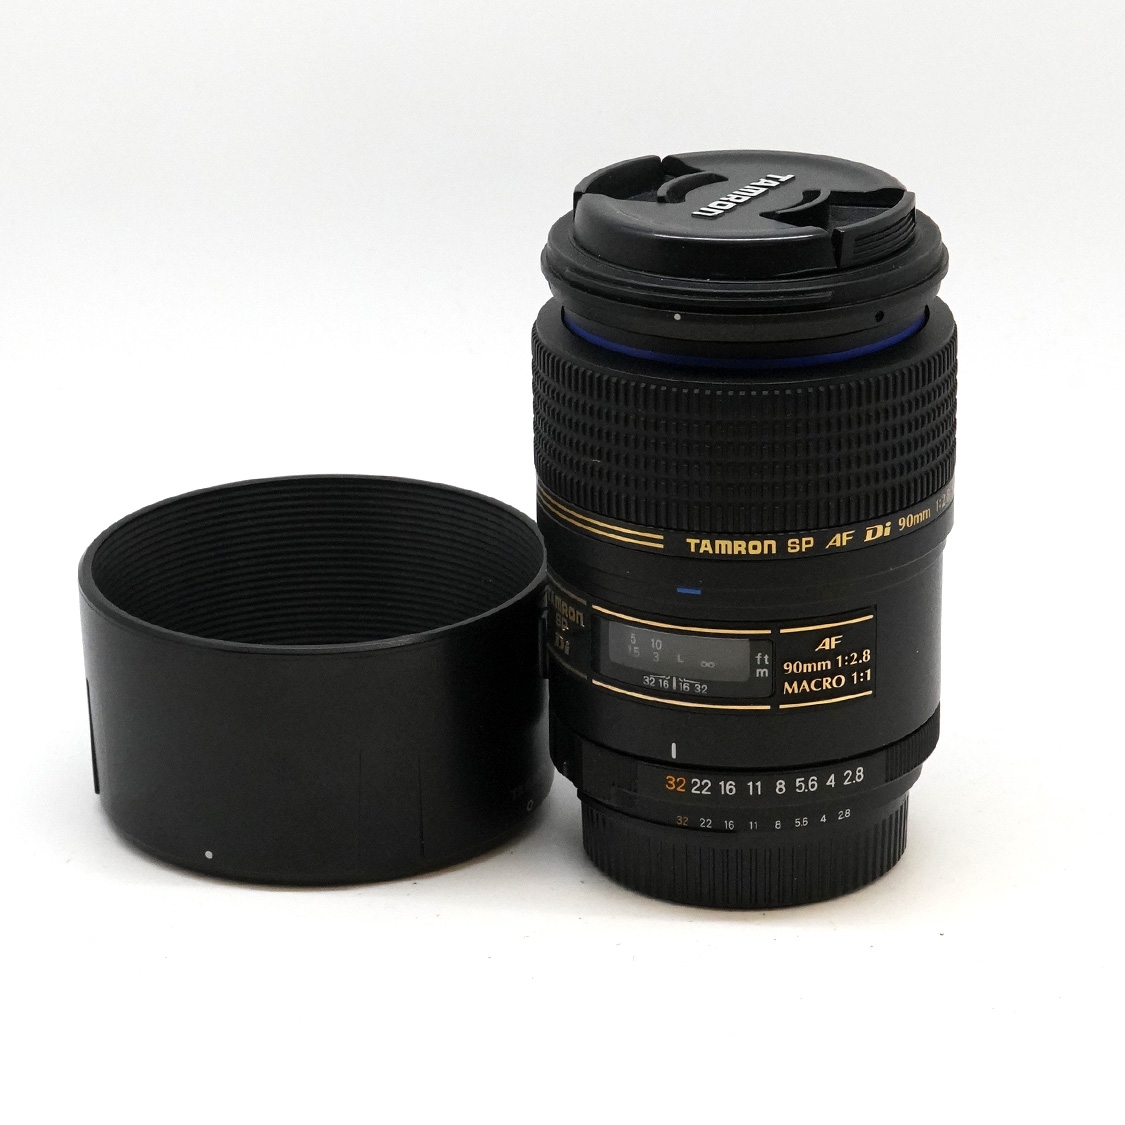 Tamron 90mm F2.8 1:1 Macro (EX) Used Lens for Nikon F Mount